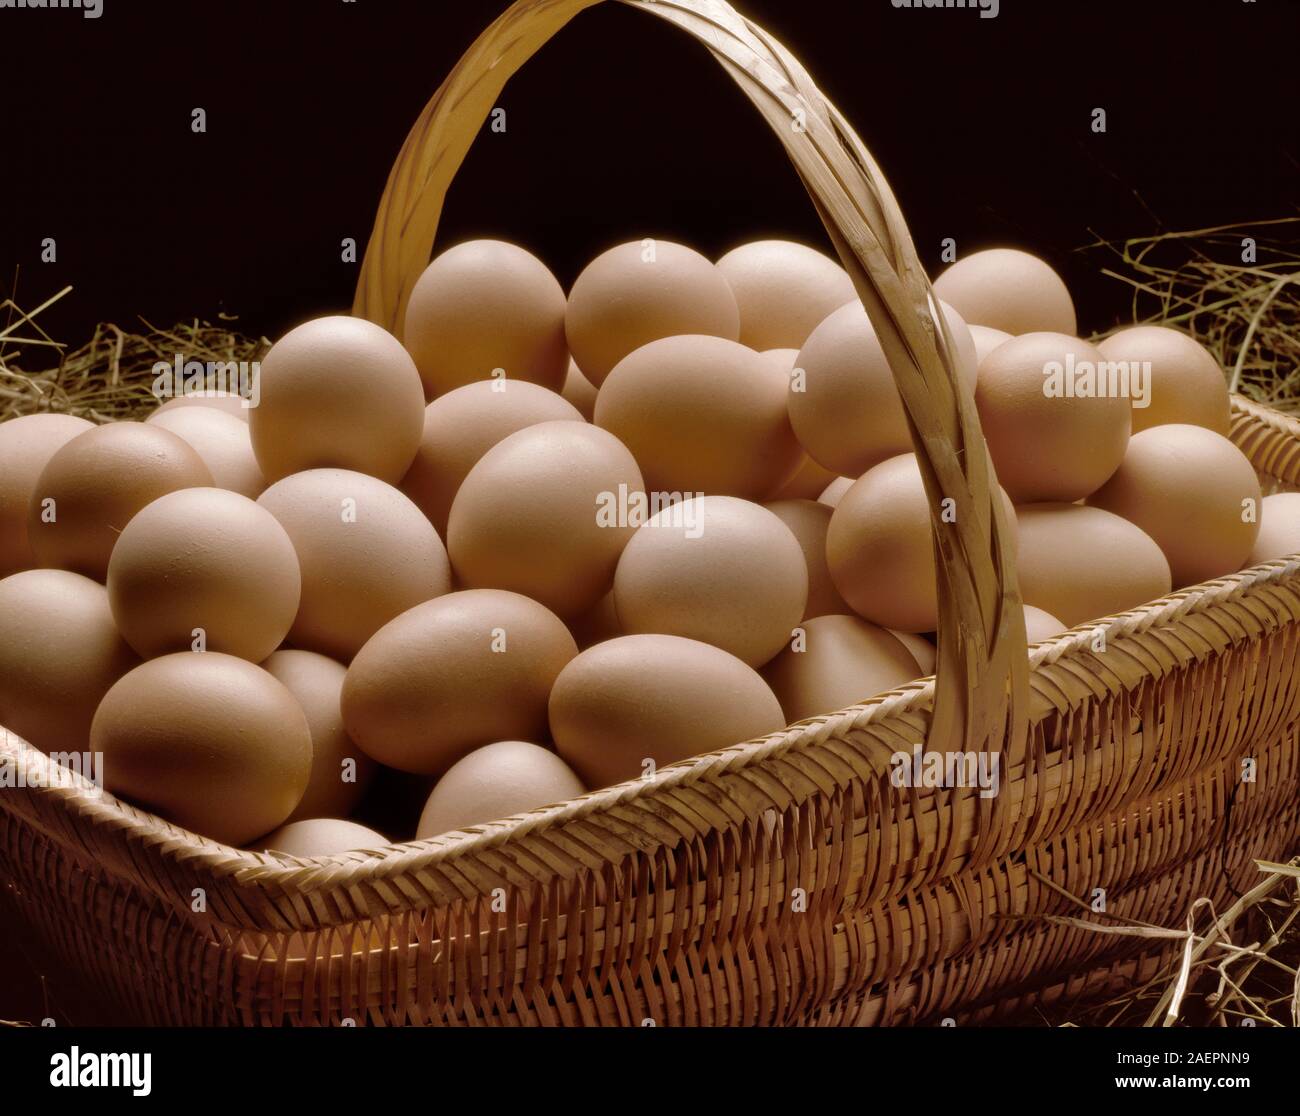 Basket of free range eggs. Stock Photo